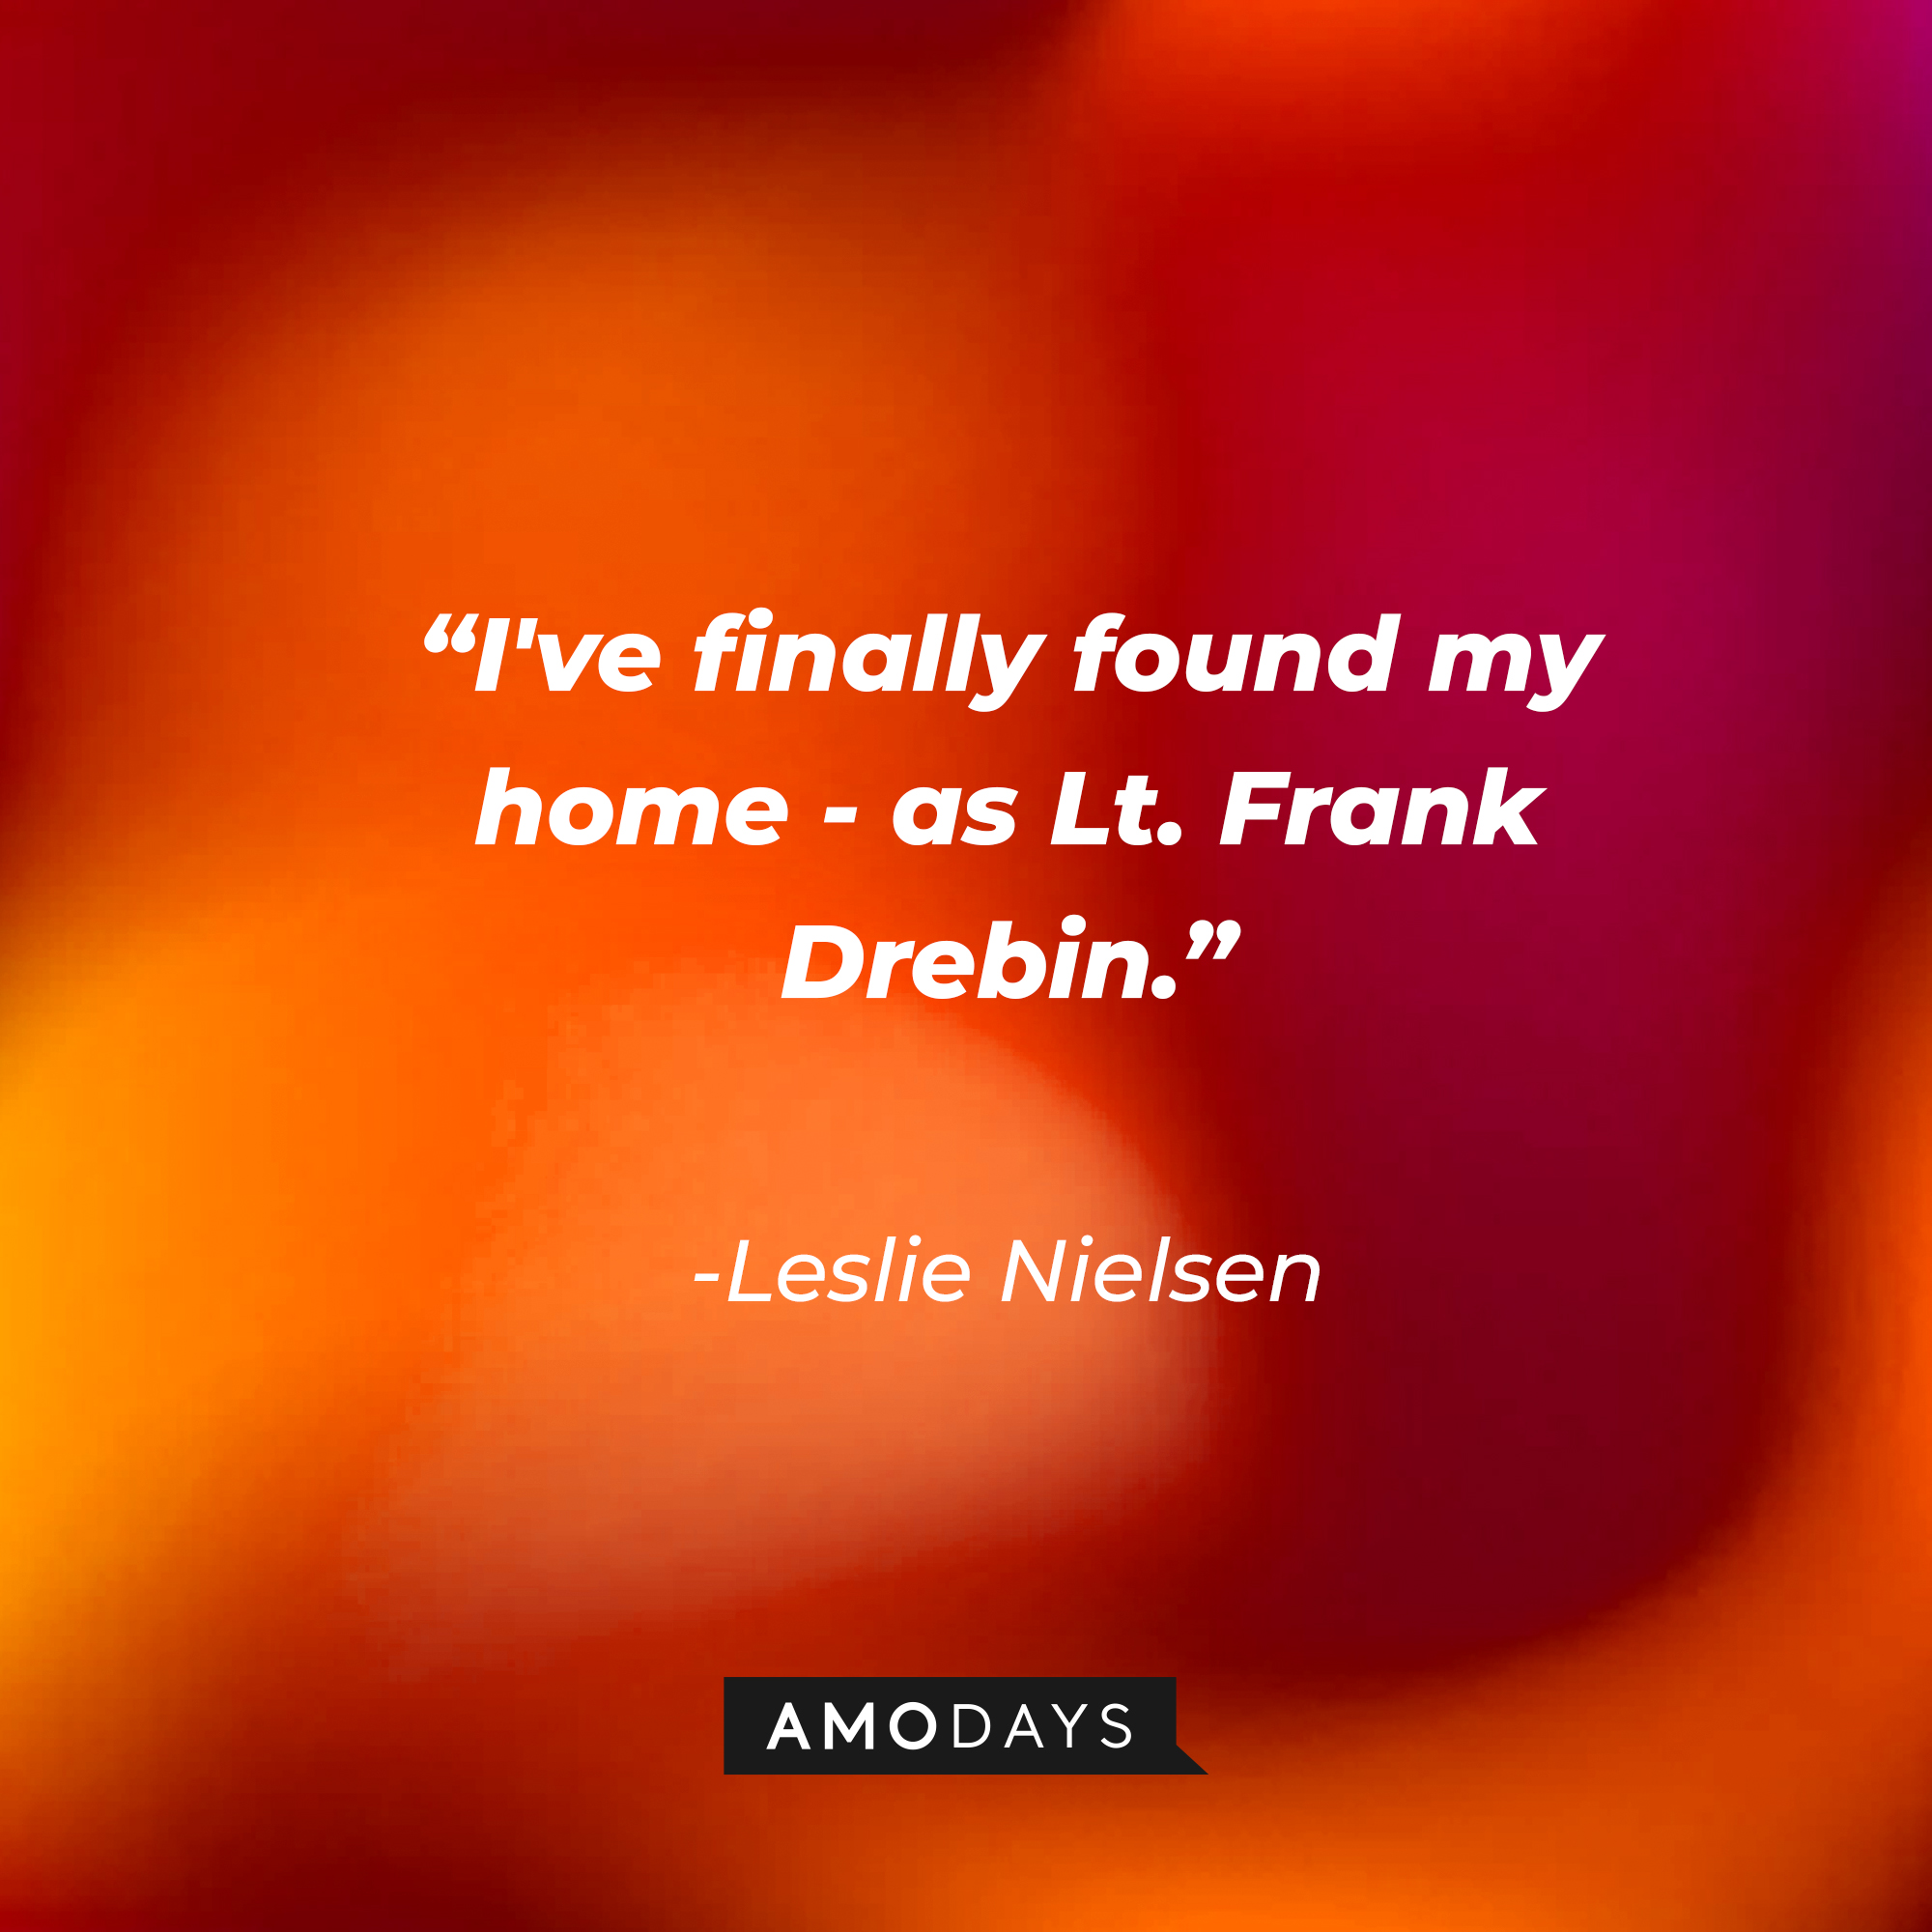 Leslie Nielsen's quote: "I've finally found my home - as Lt. Frank Drebin." | Source: Amodays